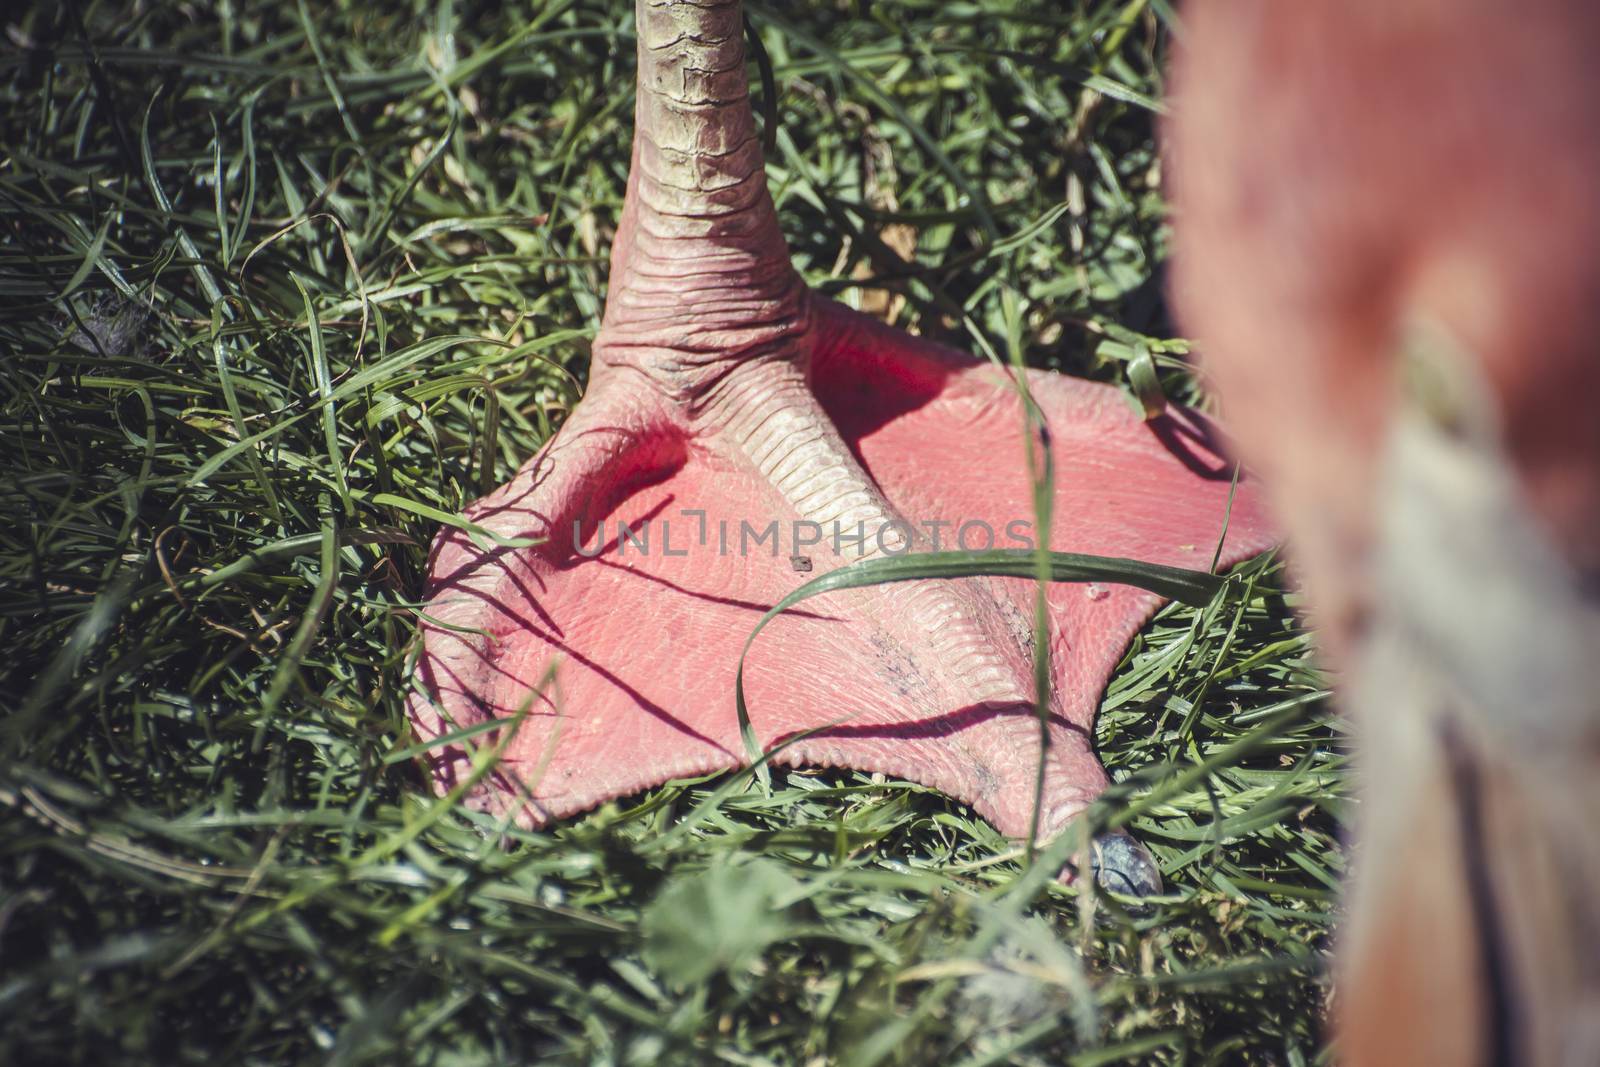 detail flamingo leg resting on the grass